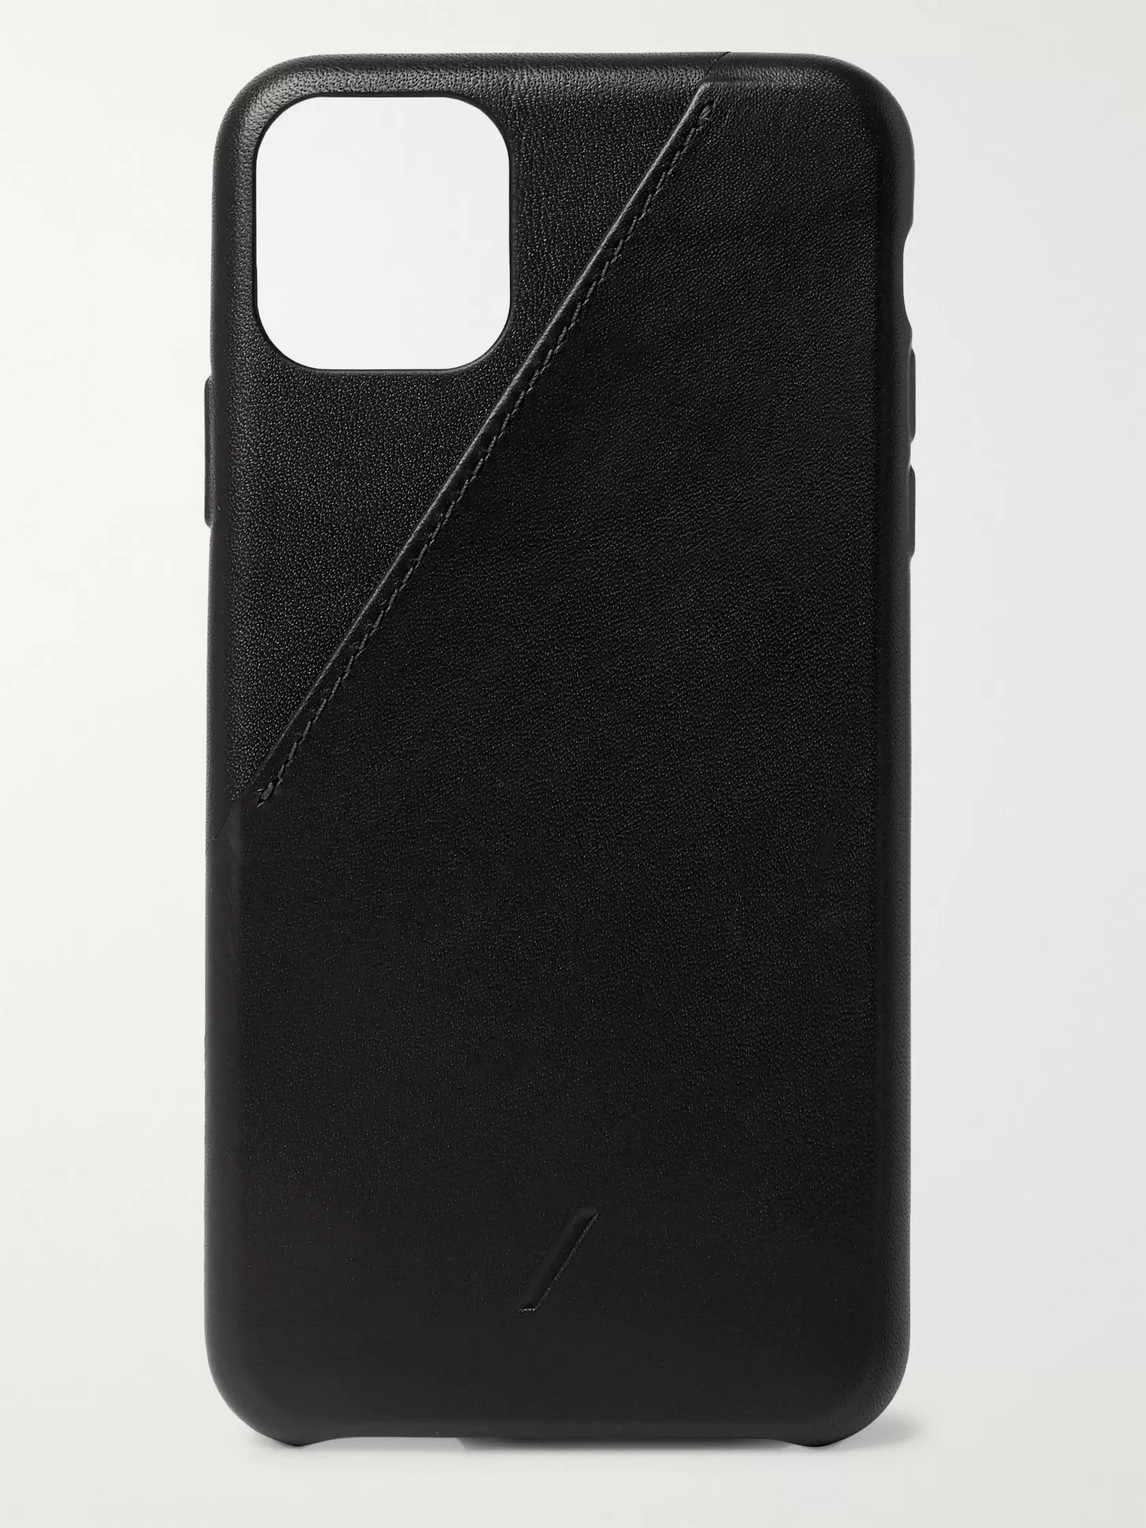 Native Union Clic Leather Iphone 11 Pro Max Case In Black